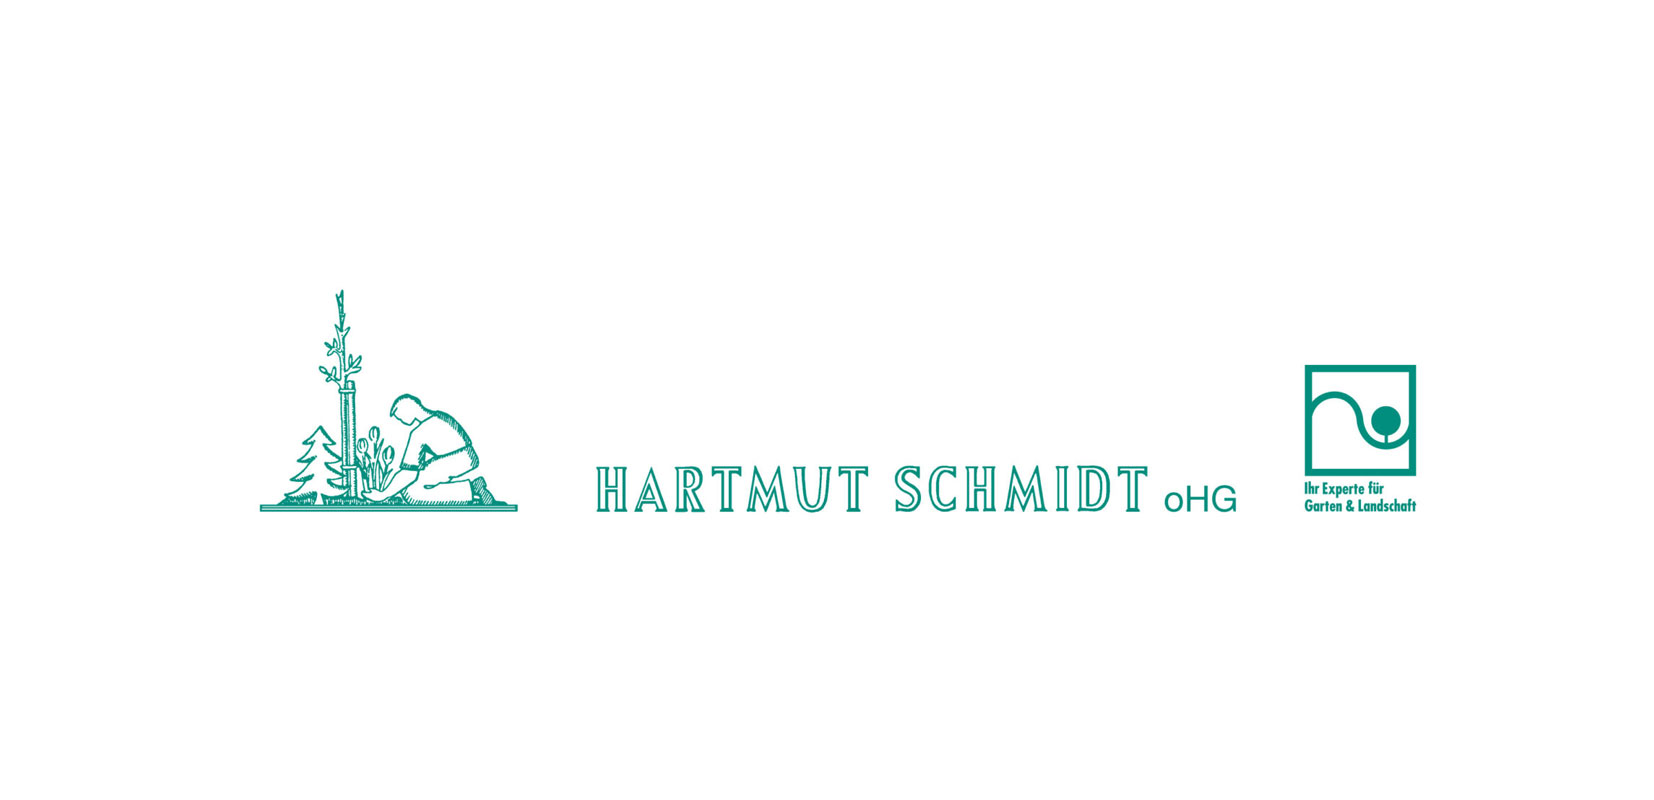 Hartmut Schmidt oHG